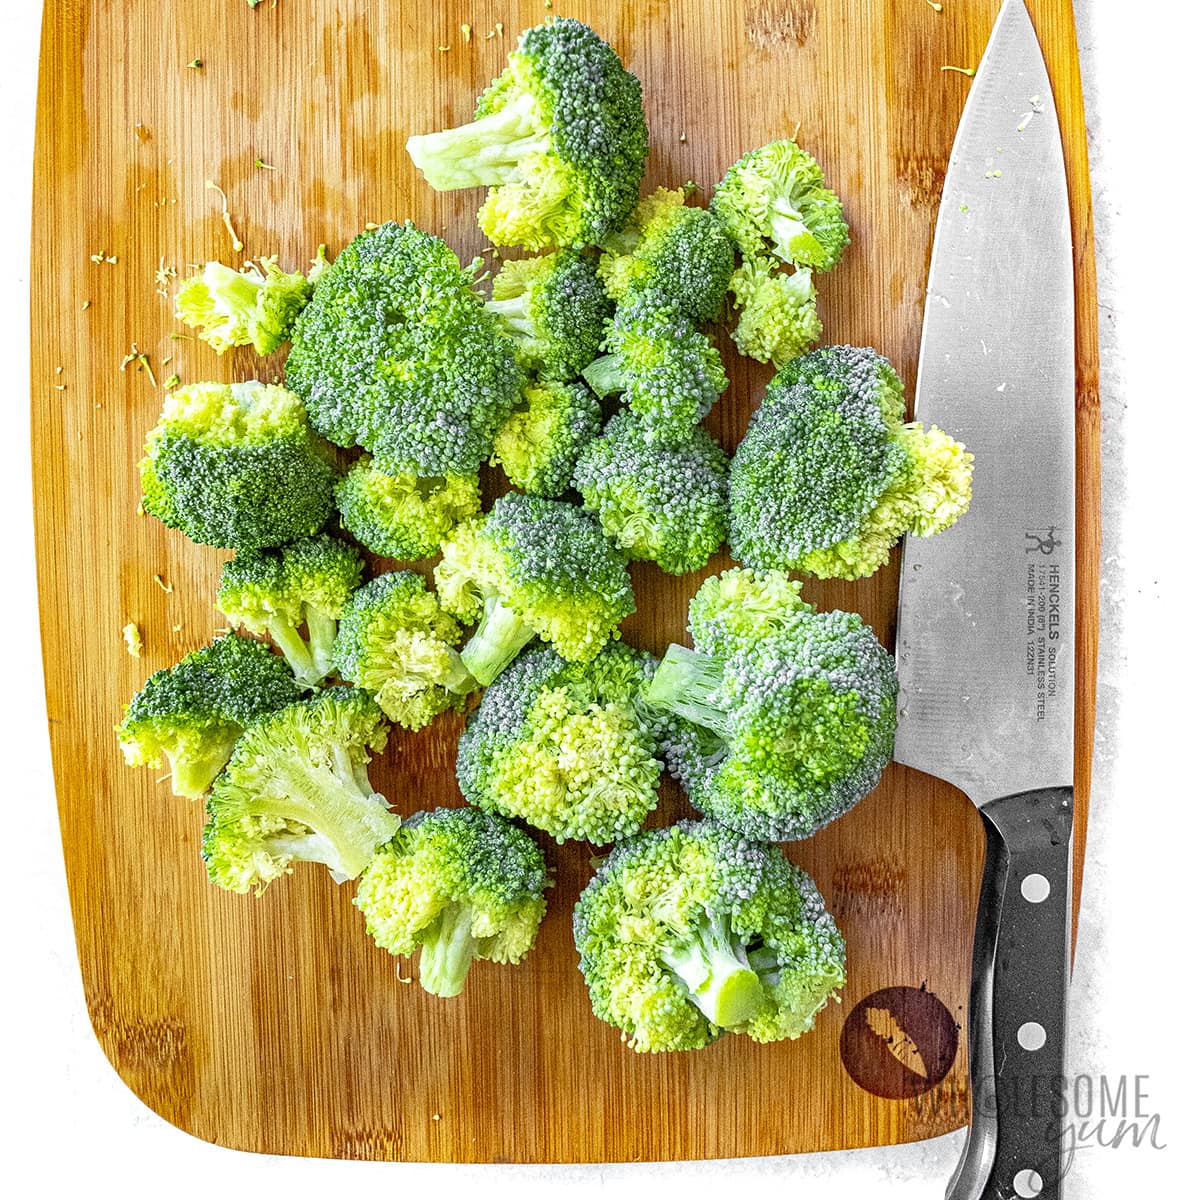 Cutting broccoli florets into similar sizes. 